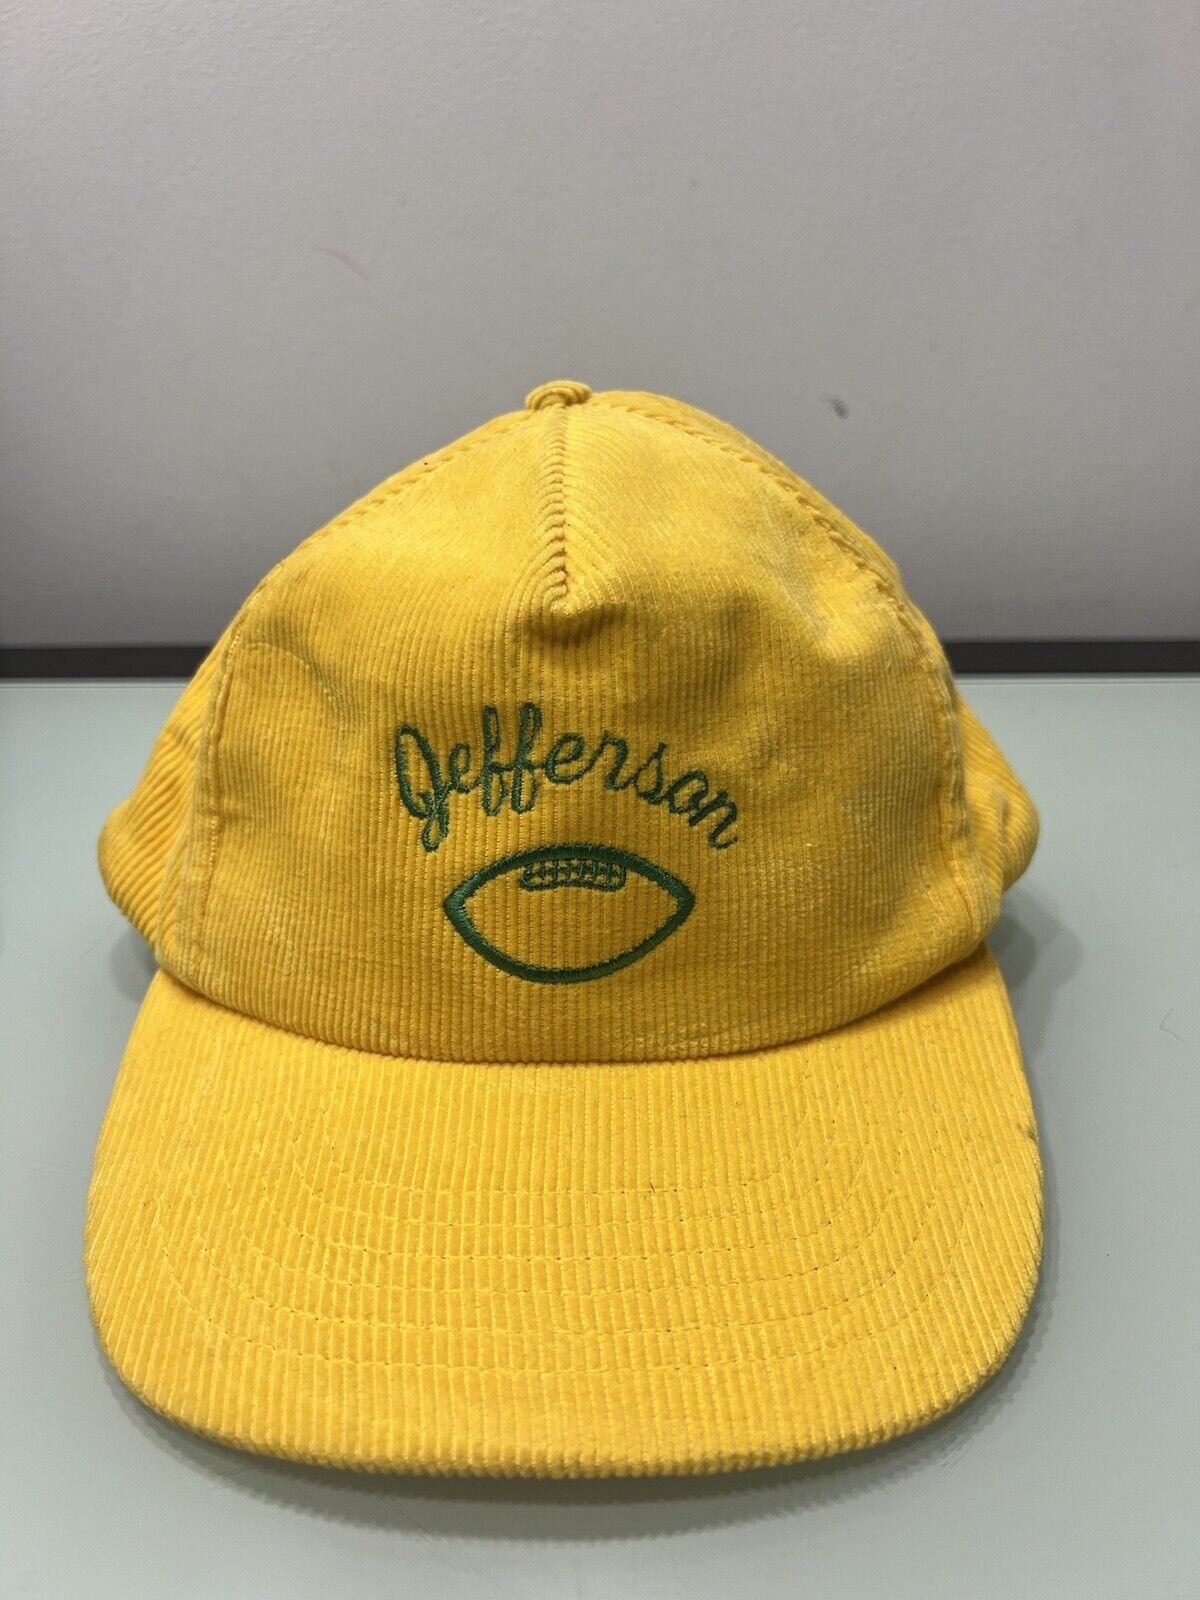 Vintage Jefferson High School (Los Angeles) Corduroy Football Hat